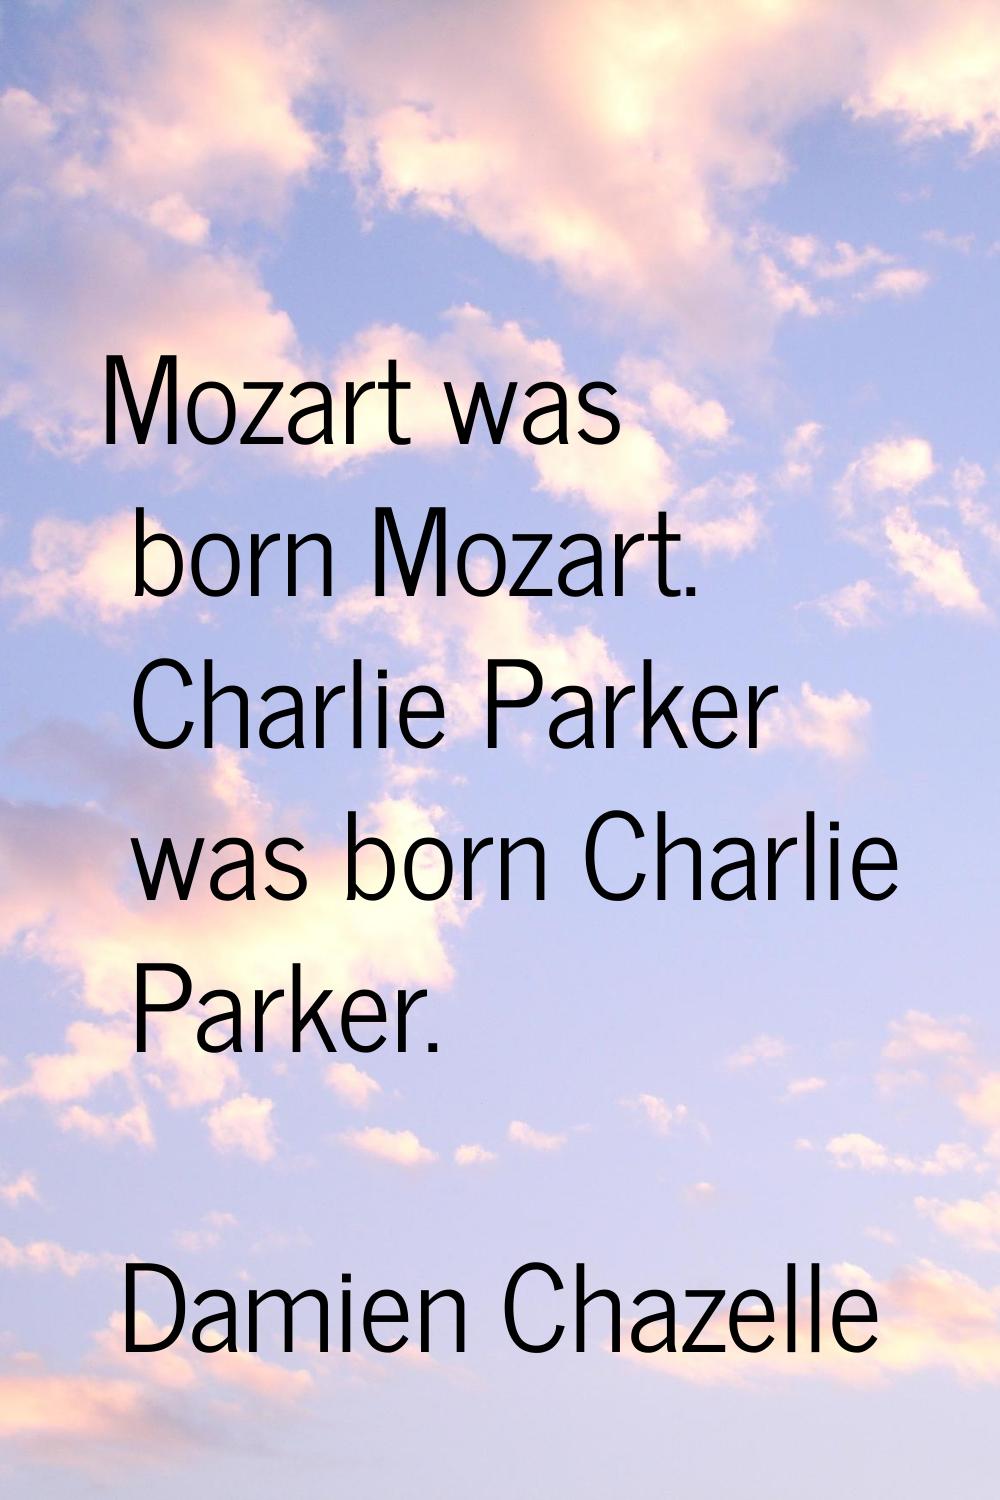 Mozart was born Mozart. Charlie Parker was born Charlie Parker.